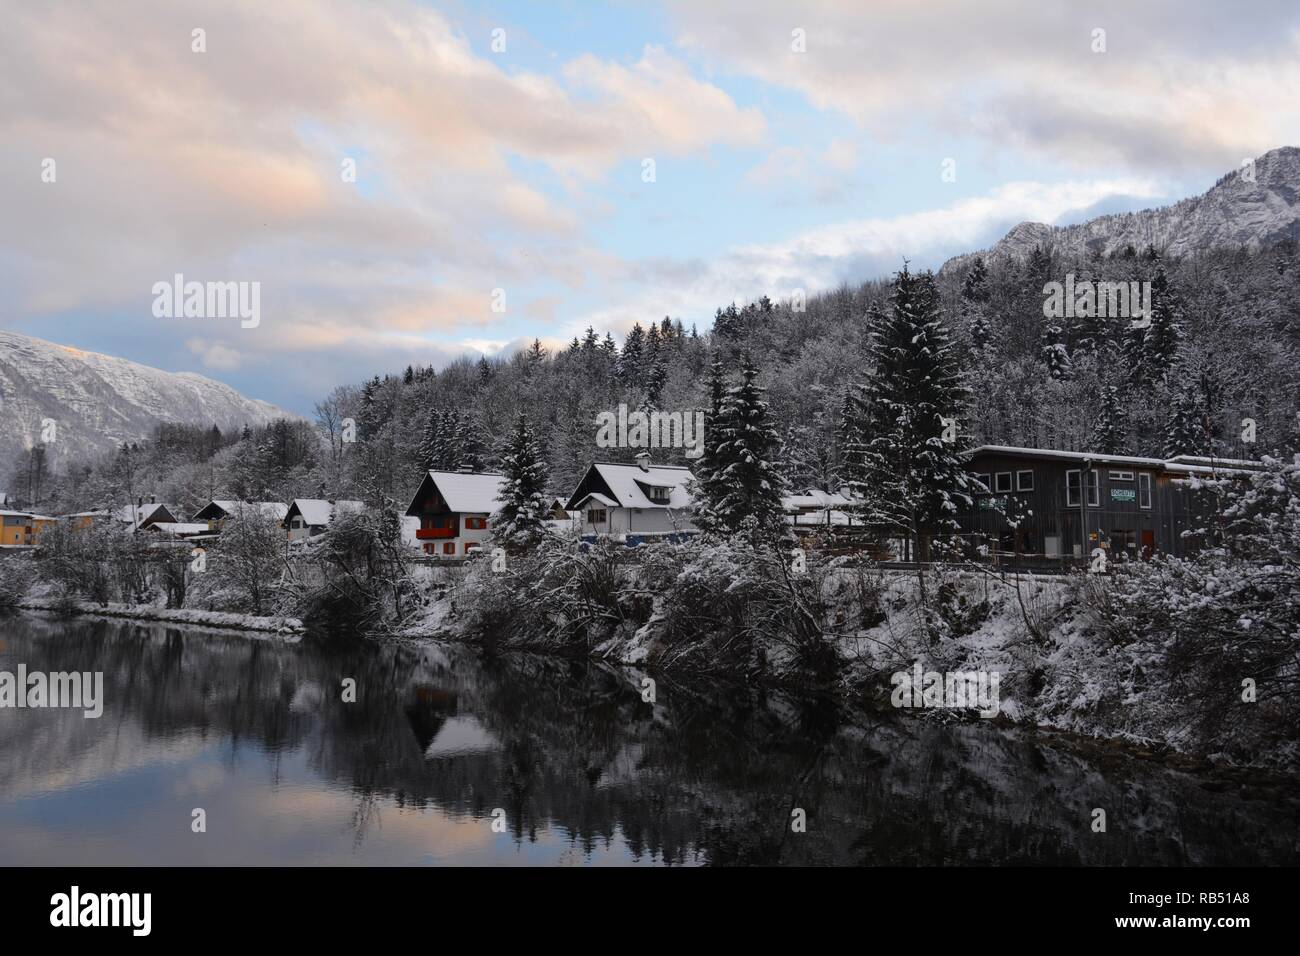 The Amazing Bad Goisern, Hallstatt. Snowy winter view from the river. Stock Photo